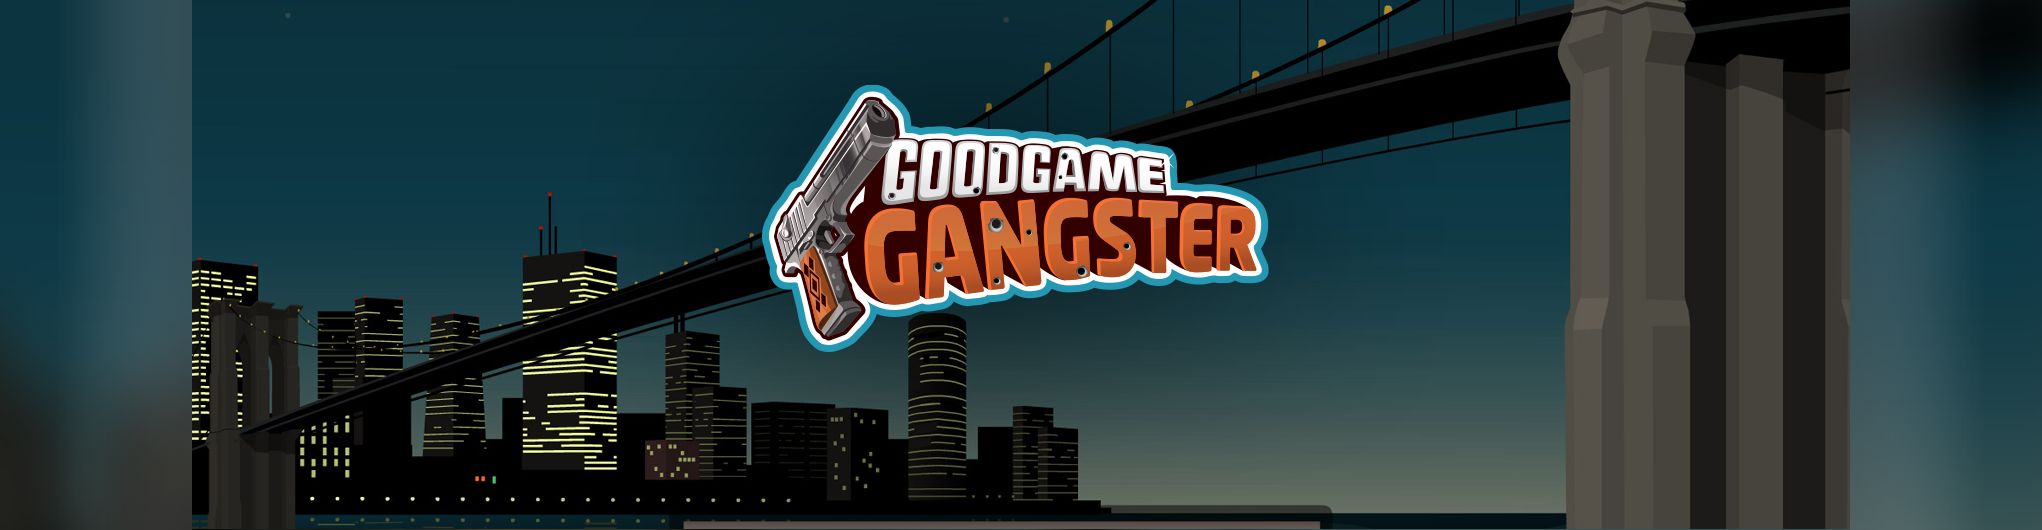 Goodgame Mafia (Gangster)